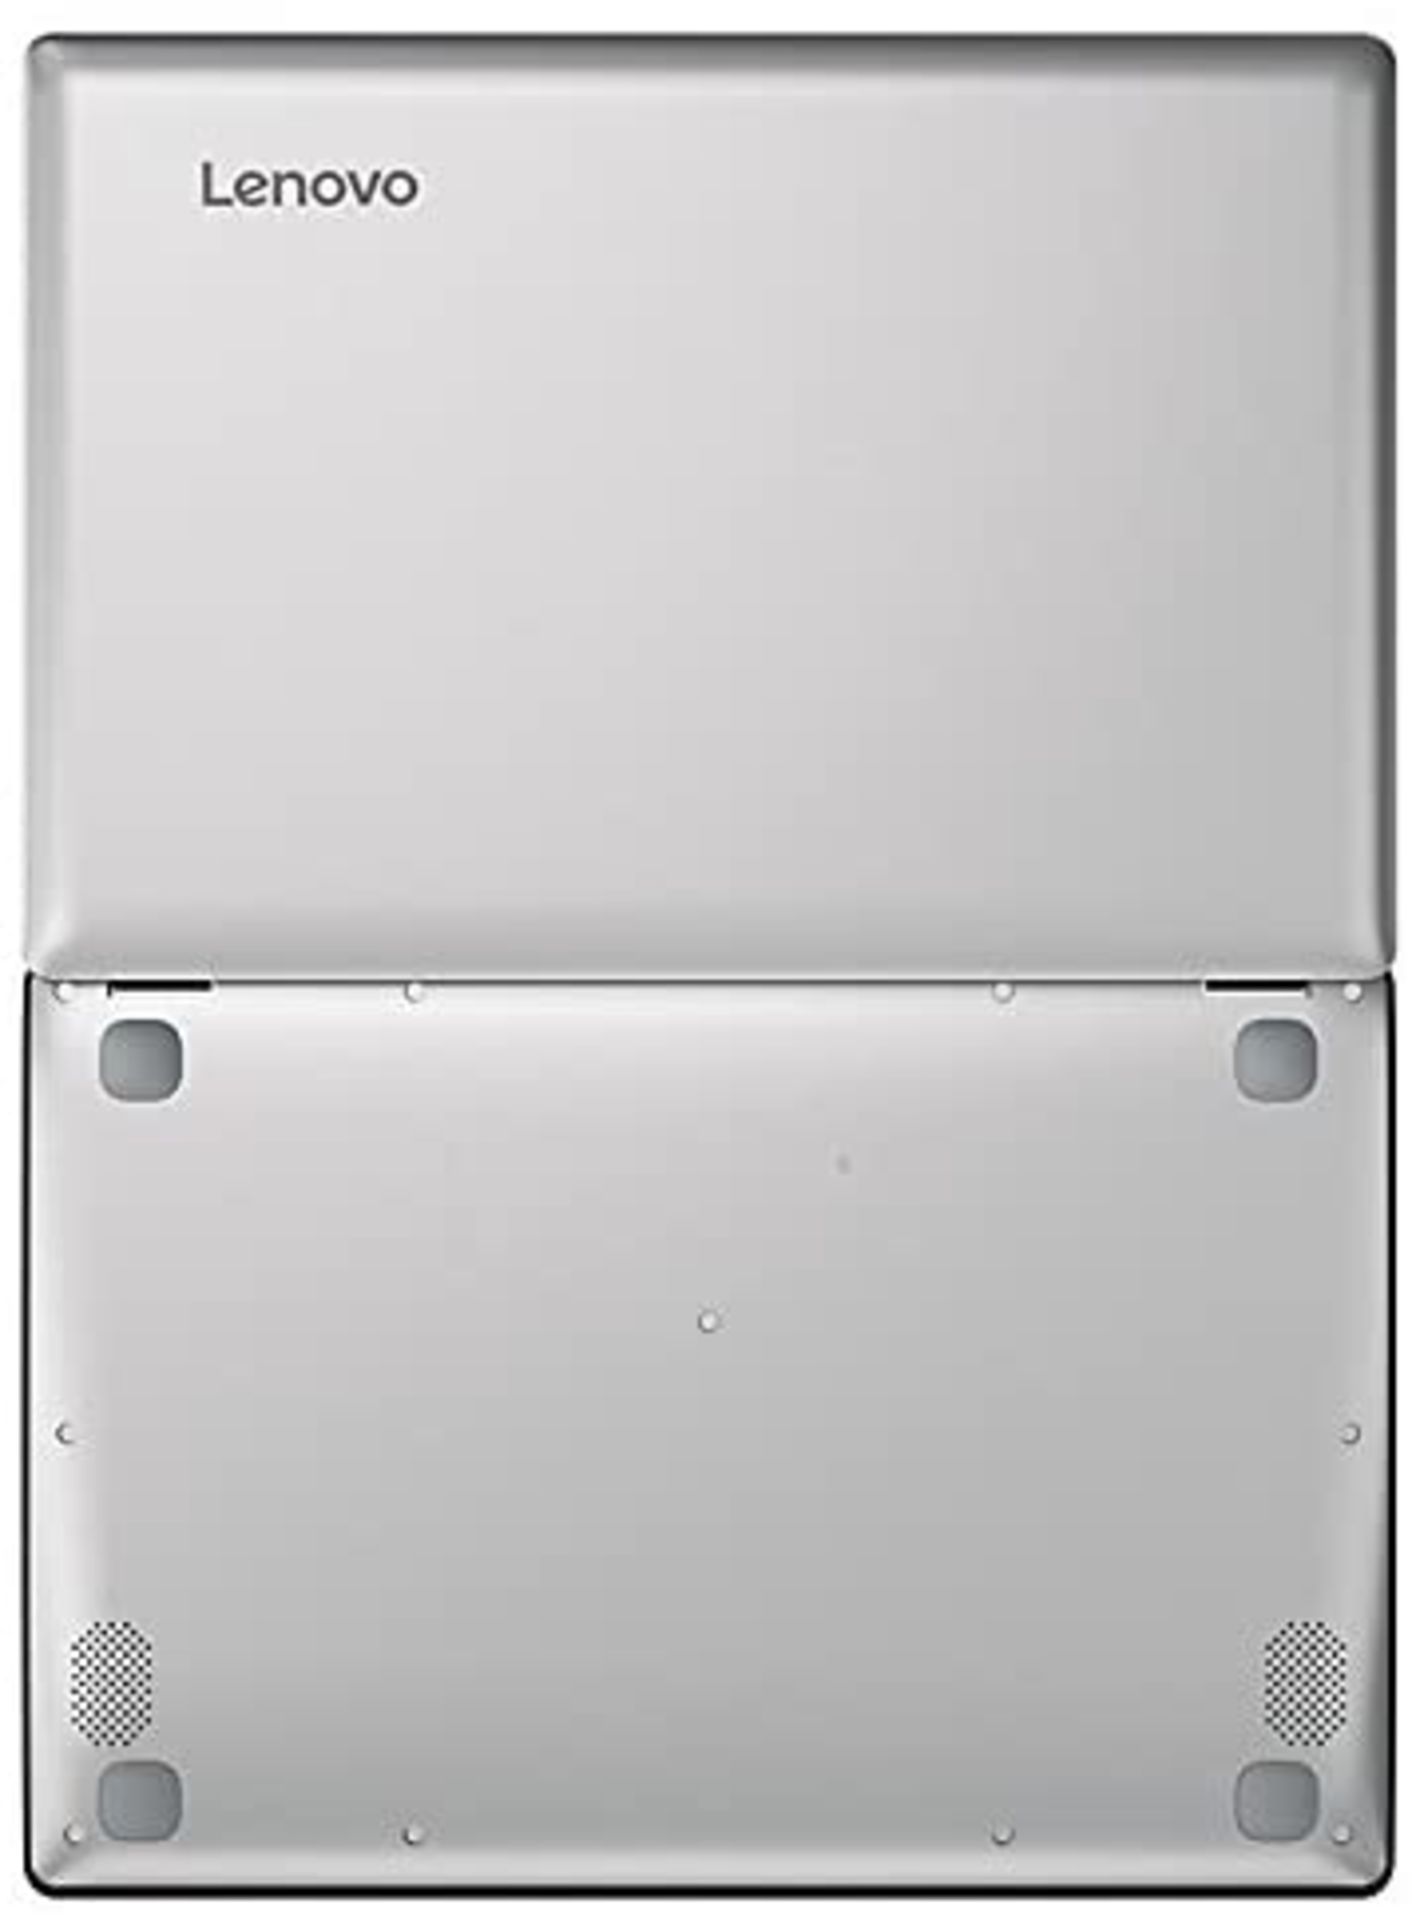 (T8) 1 x GRADE B - Lenovo Ideapad 110S 11.6" Laptop Intel Celeron N3060, 2GB RAM, 32GB eMMC, Wi... - Image 3 of 3